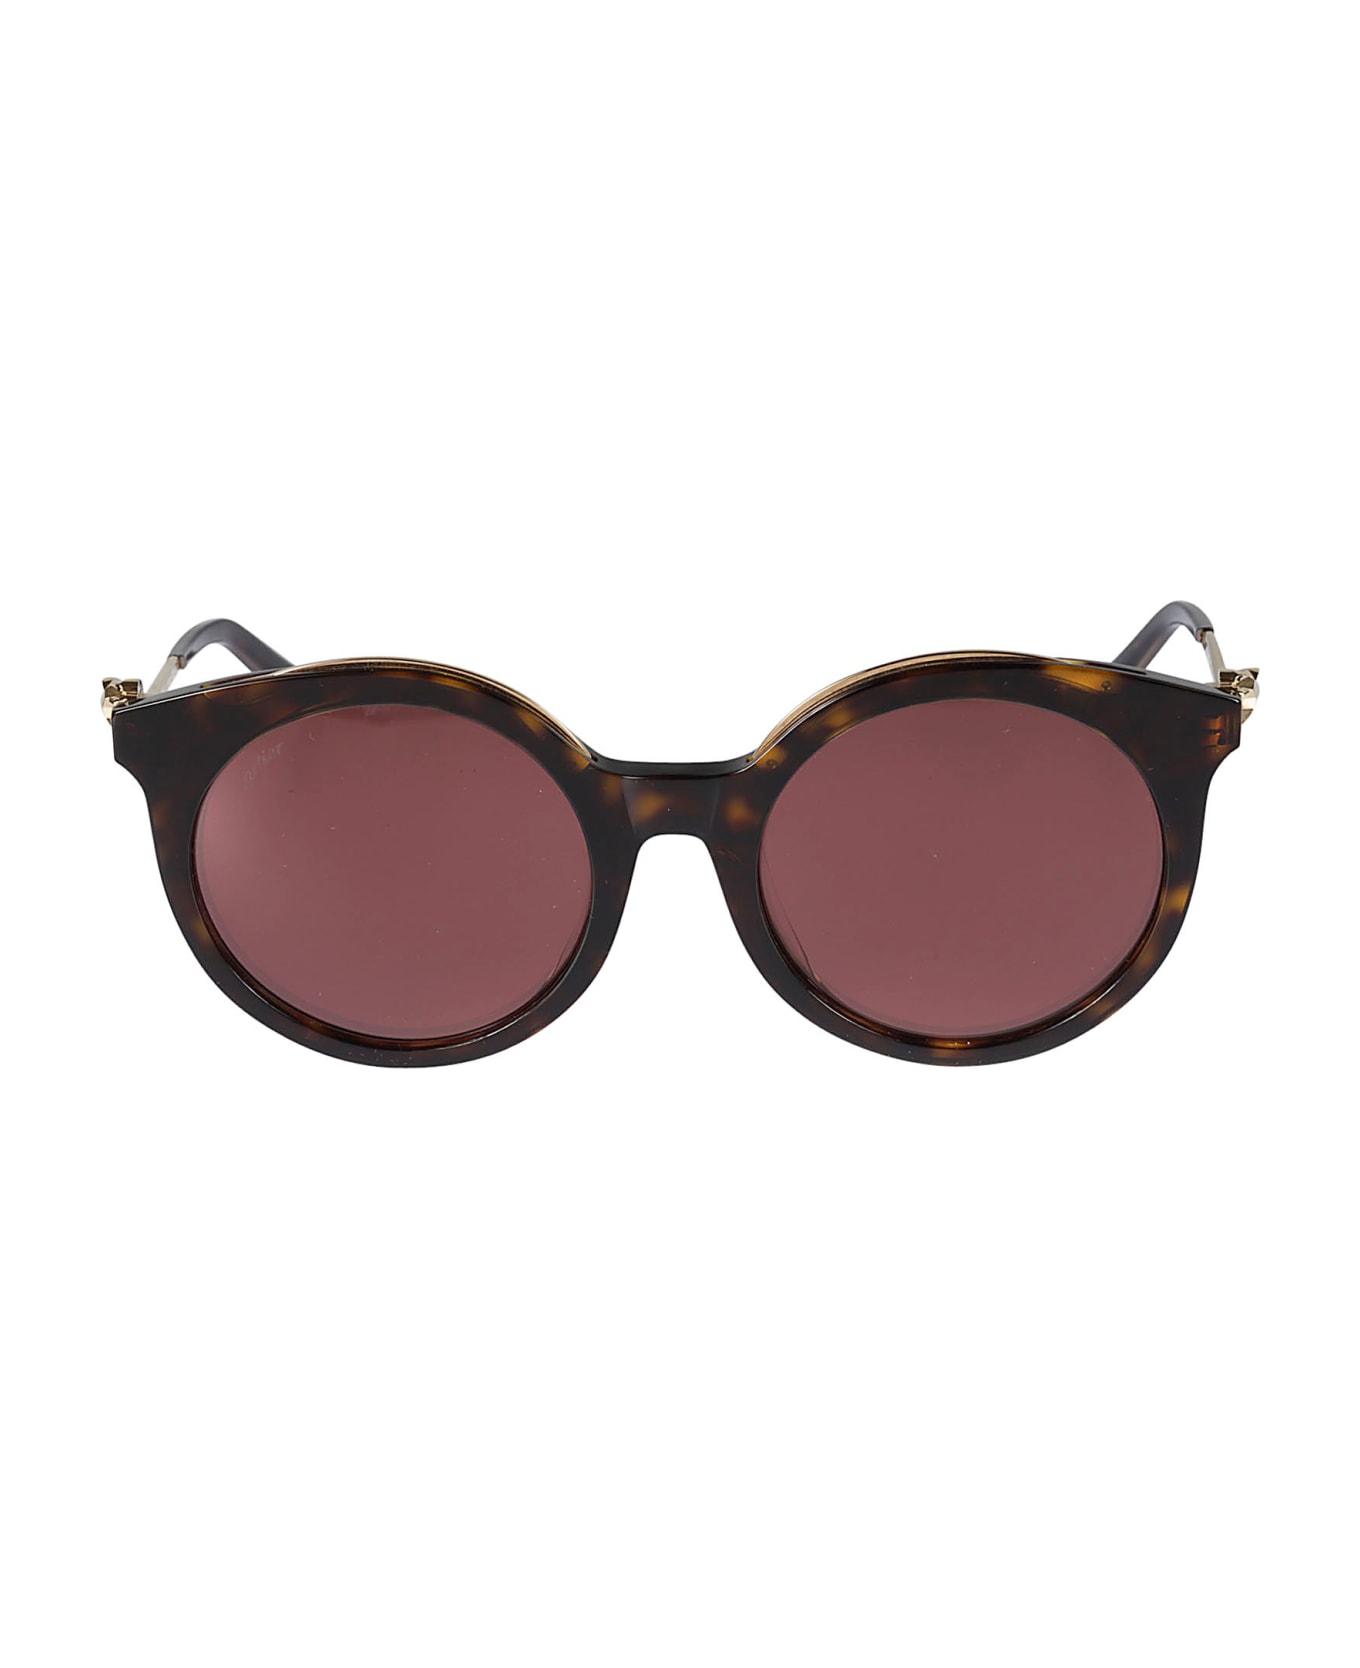 Cartier Eyewear Cay Eye Sunglasses - 002 havana gold red サングラス